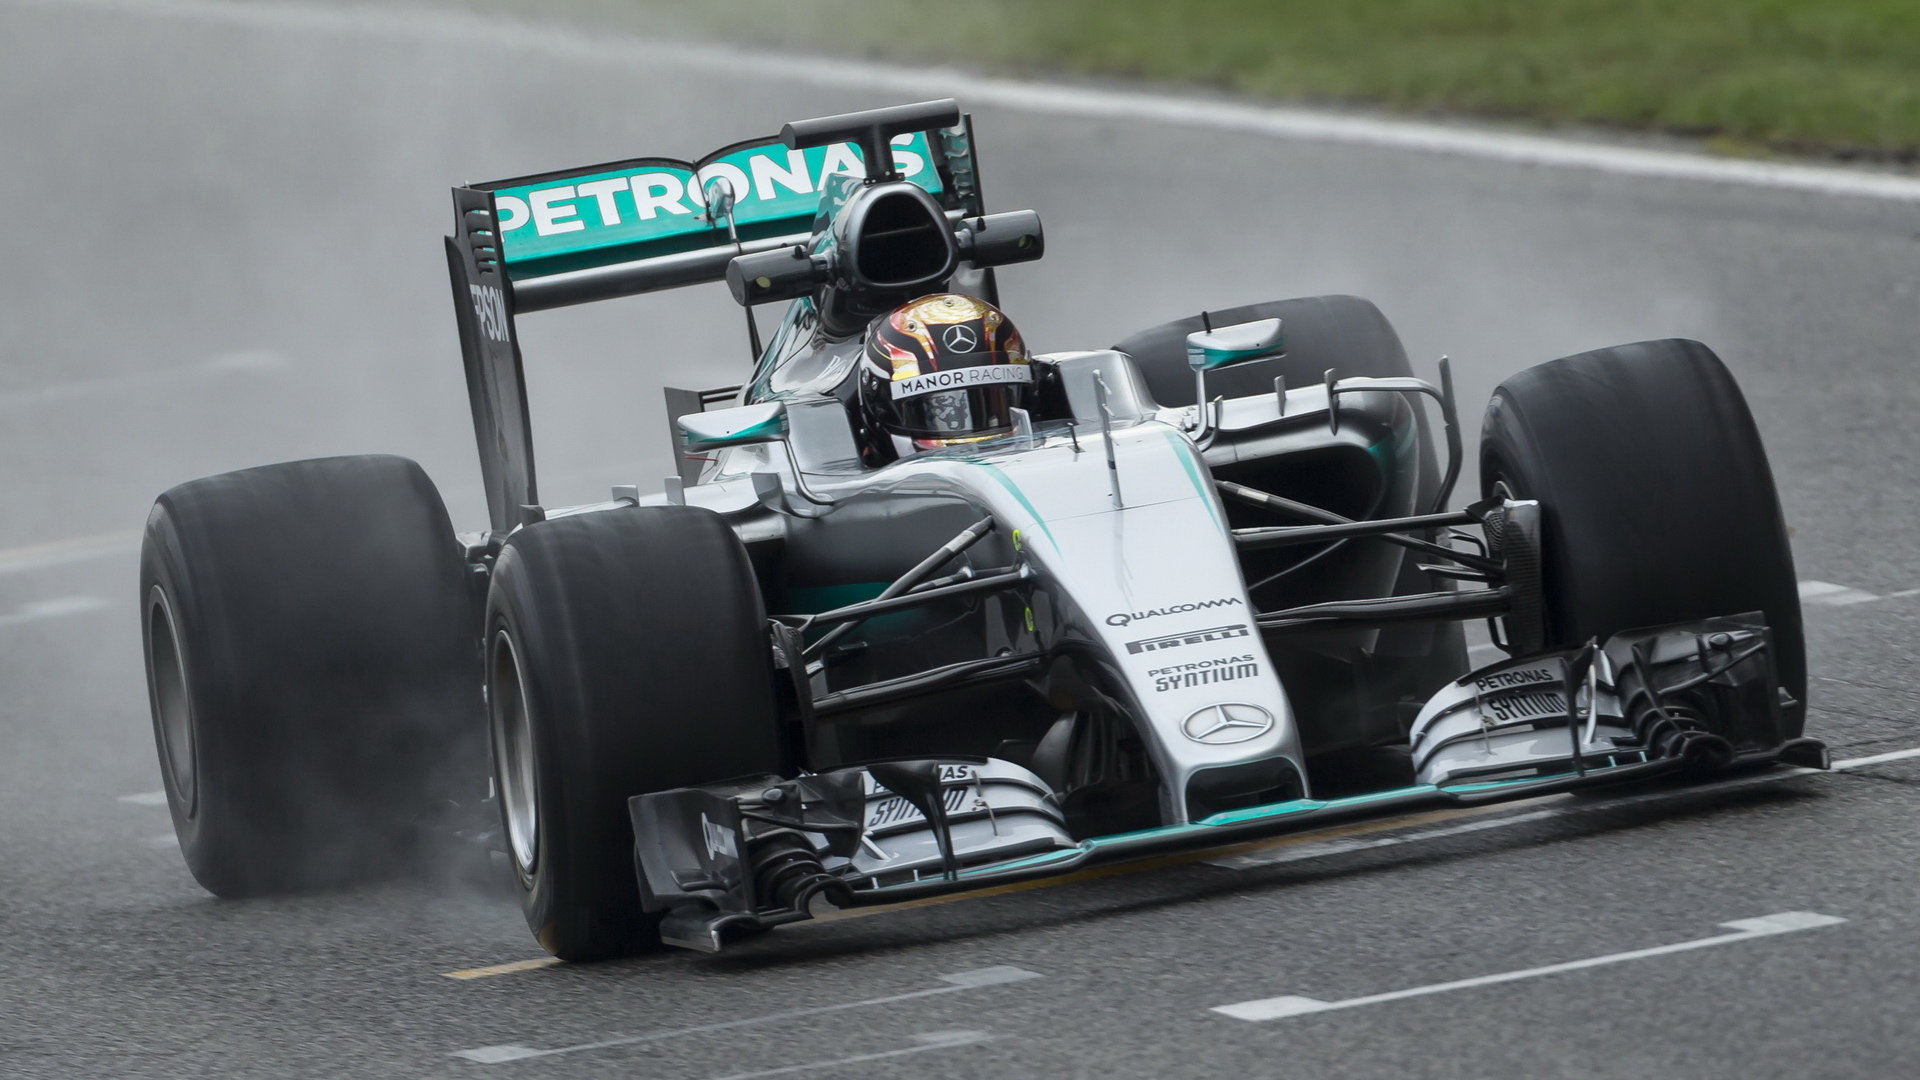 Pascal Wehrlein u Mercedesu zaskočil za zraněného Hamiltona